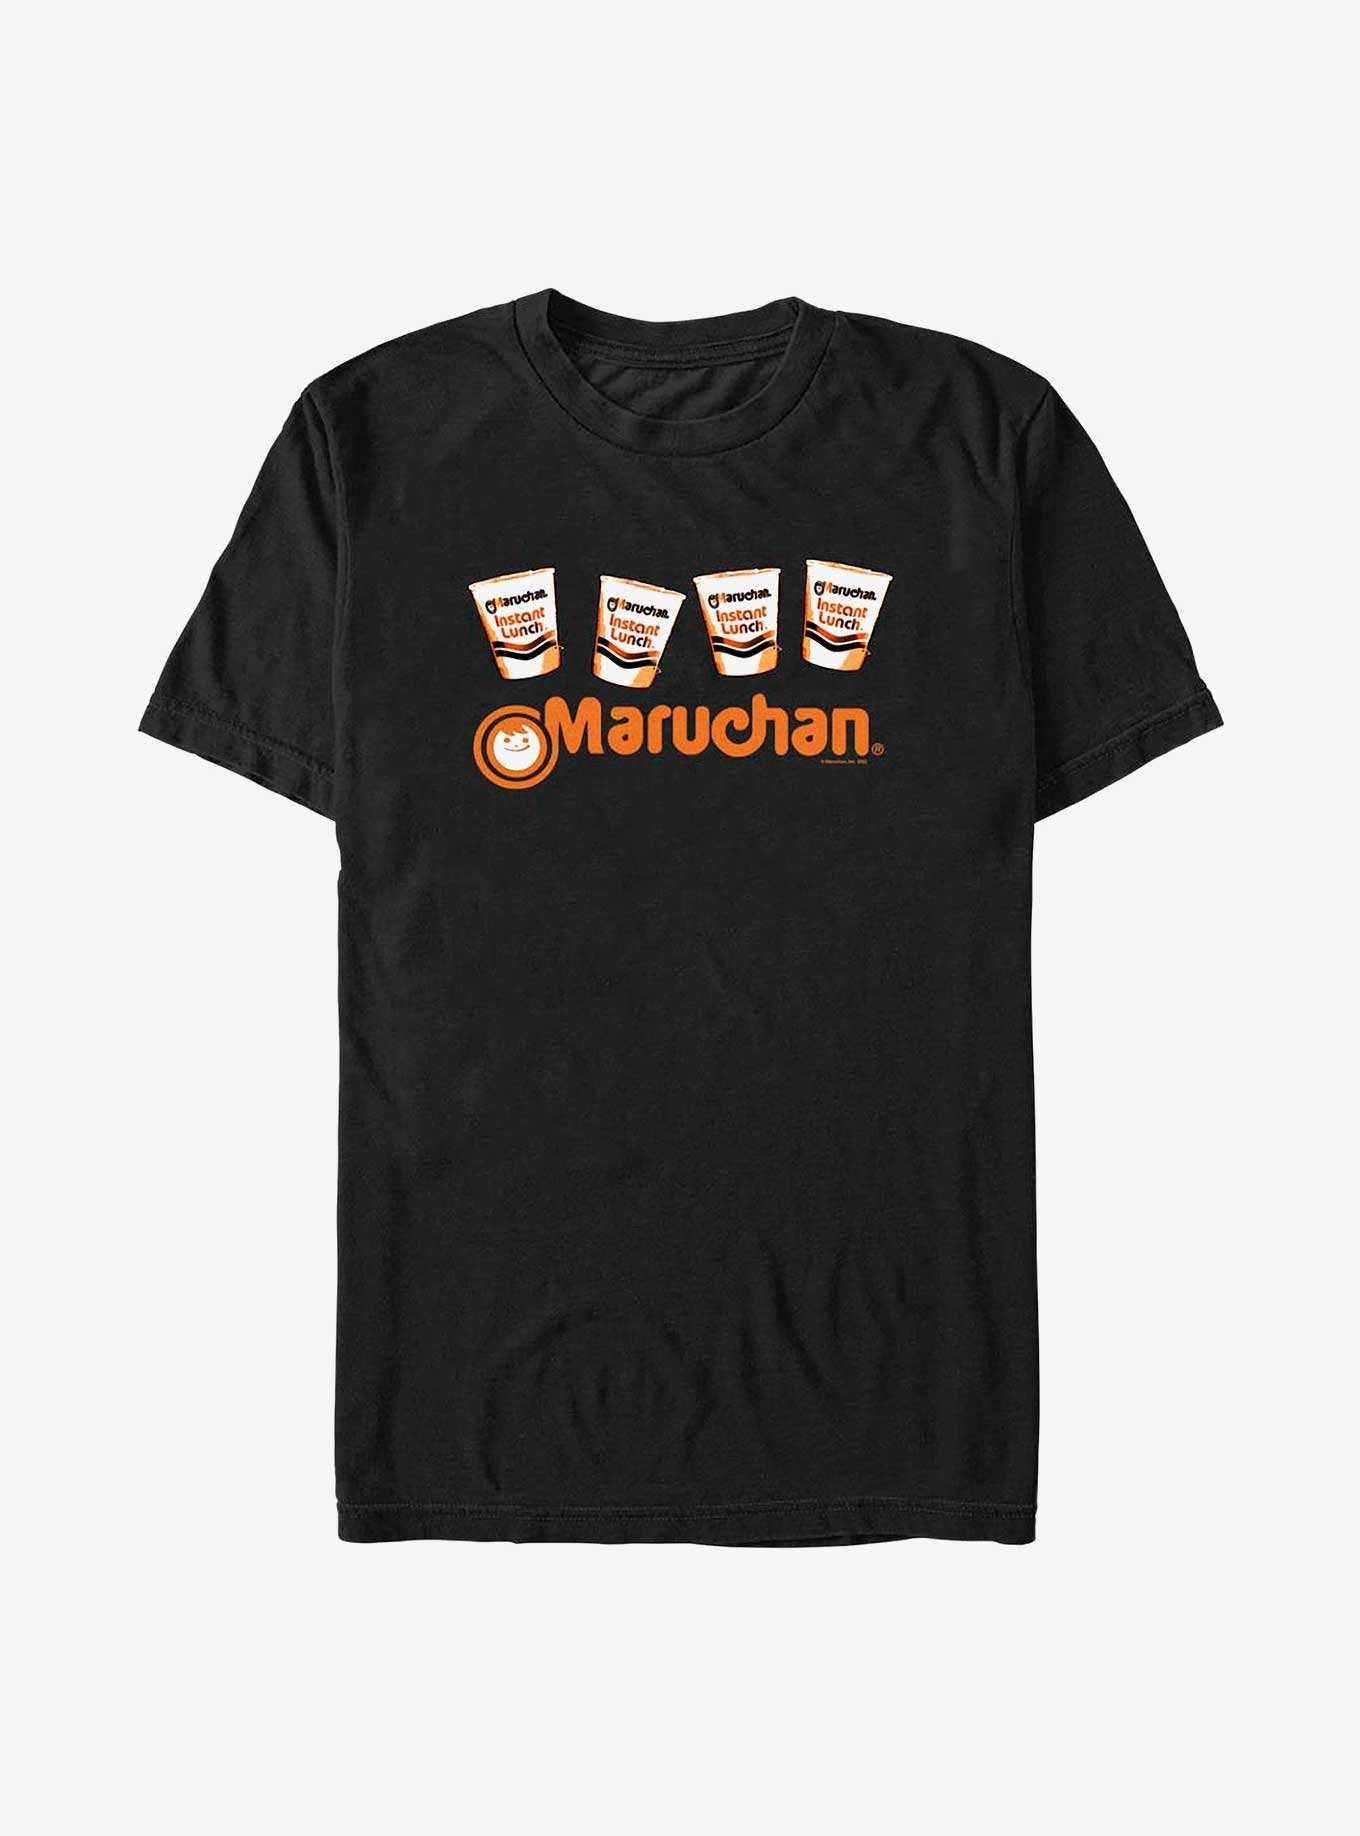 Maruchan Noodle Cups Row T-Shirt, , hi-res